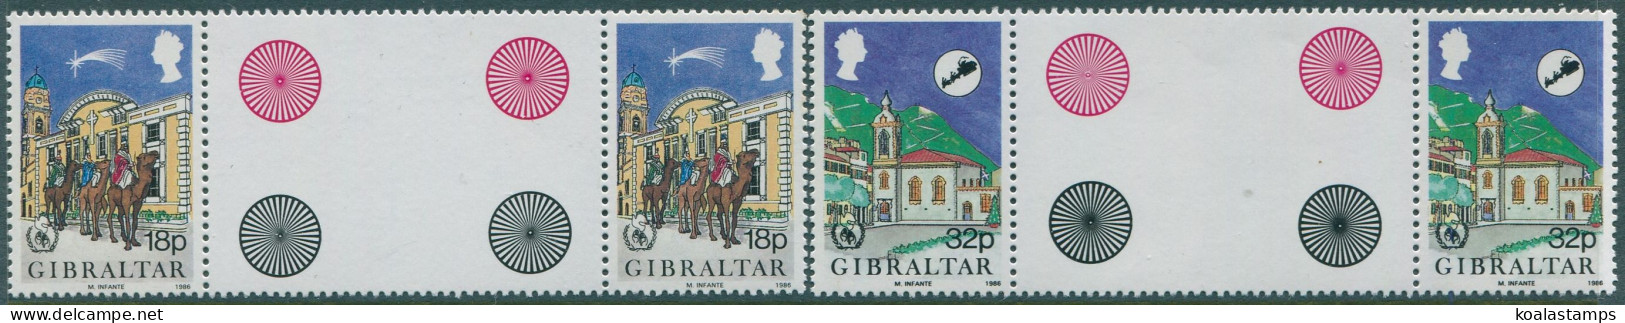 Gibraltar 1986 SG546-547 Christmas Gutter Pairs Set MNH - Gibraltar